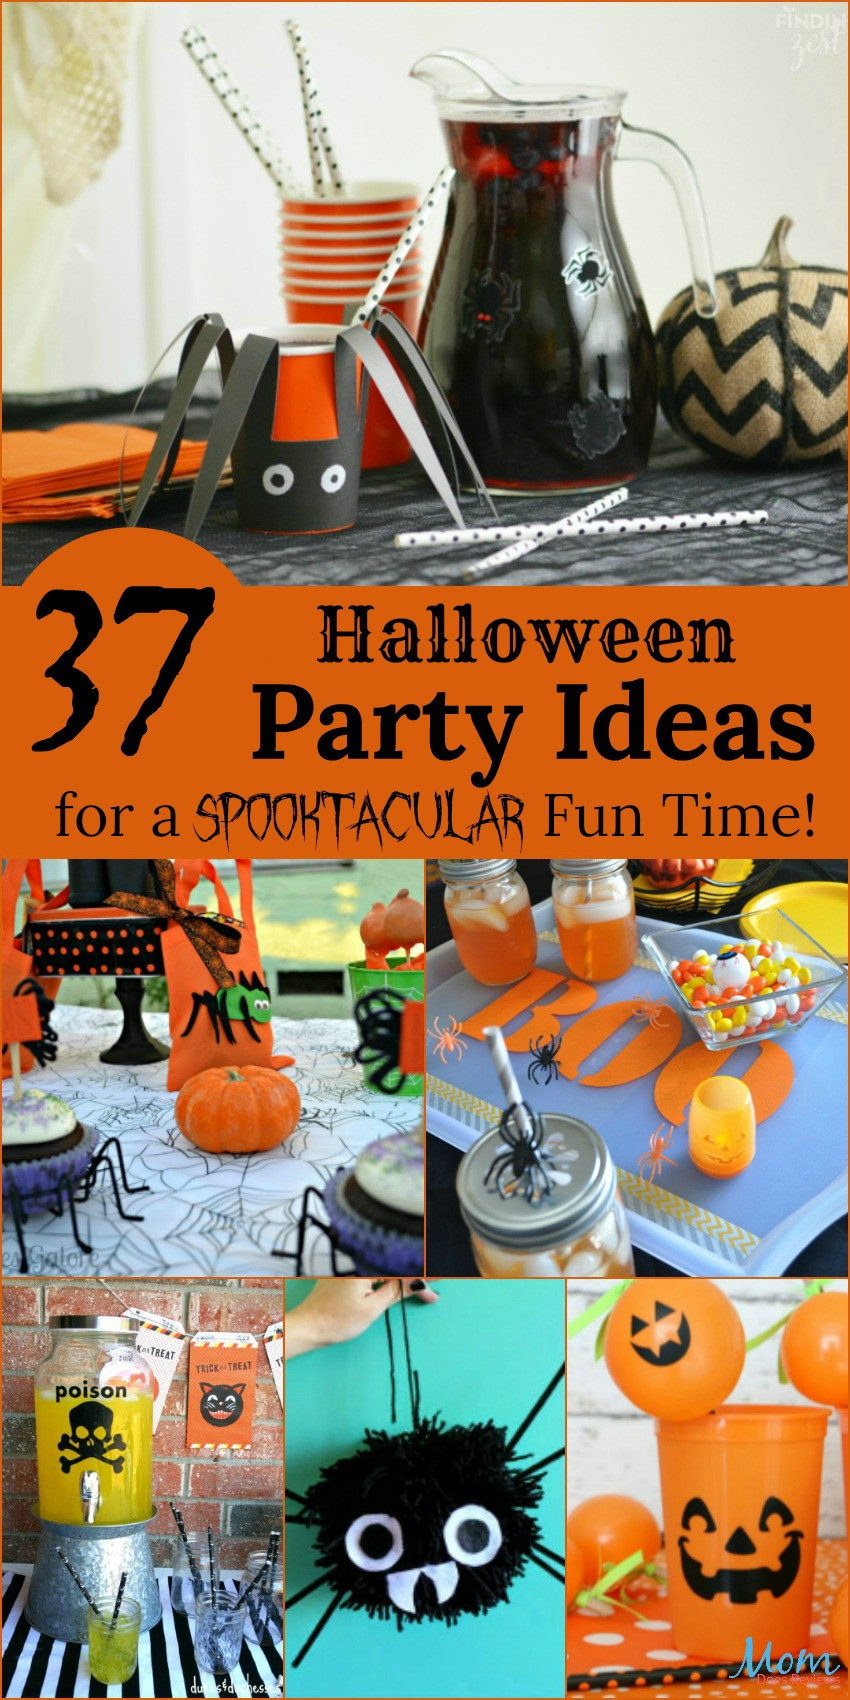 Good Halloween Party Ideas
 37 Halloween Party Ideas for a Spooktacular Fun Time